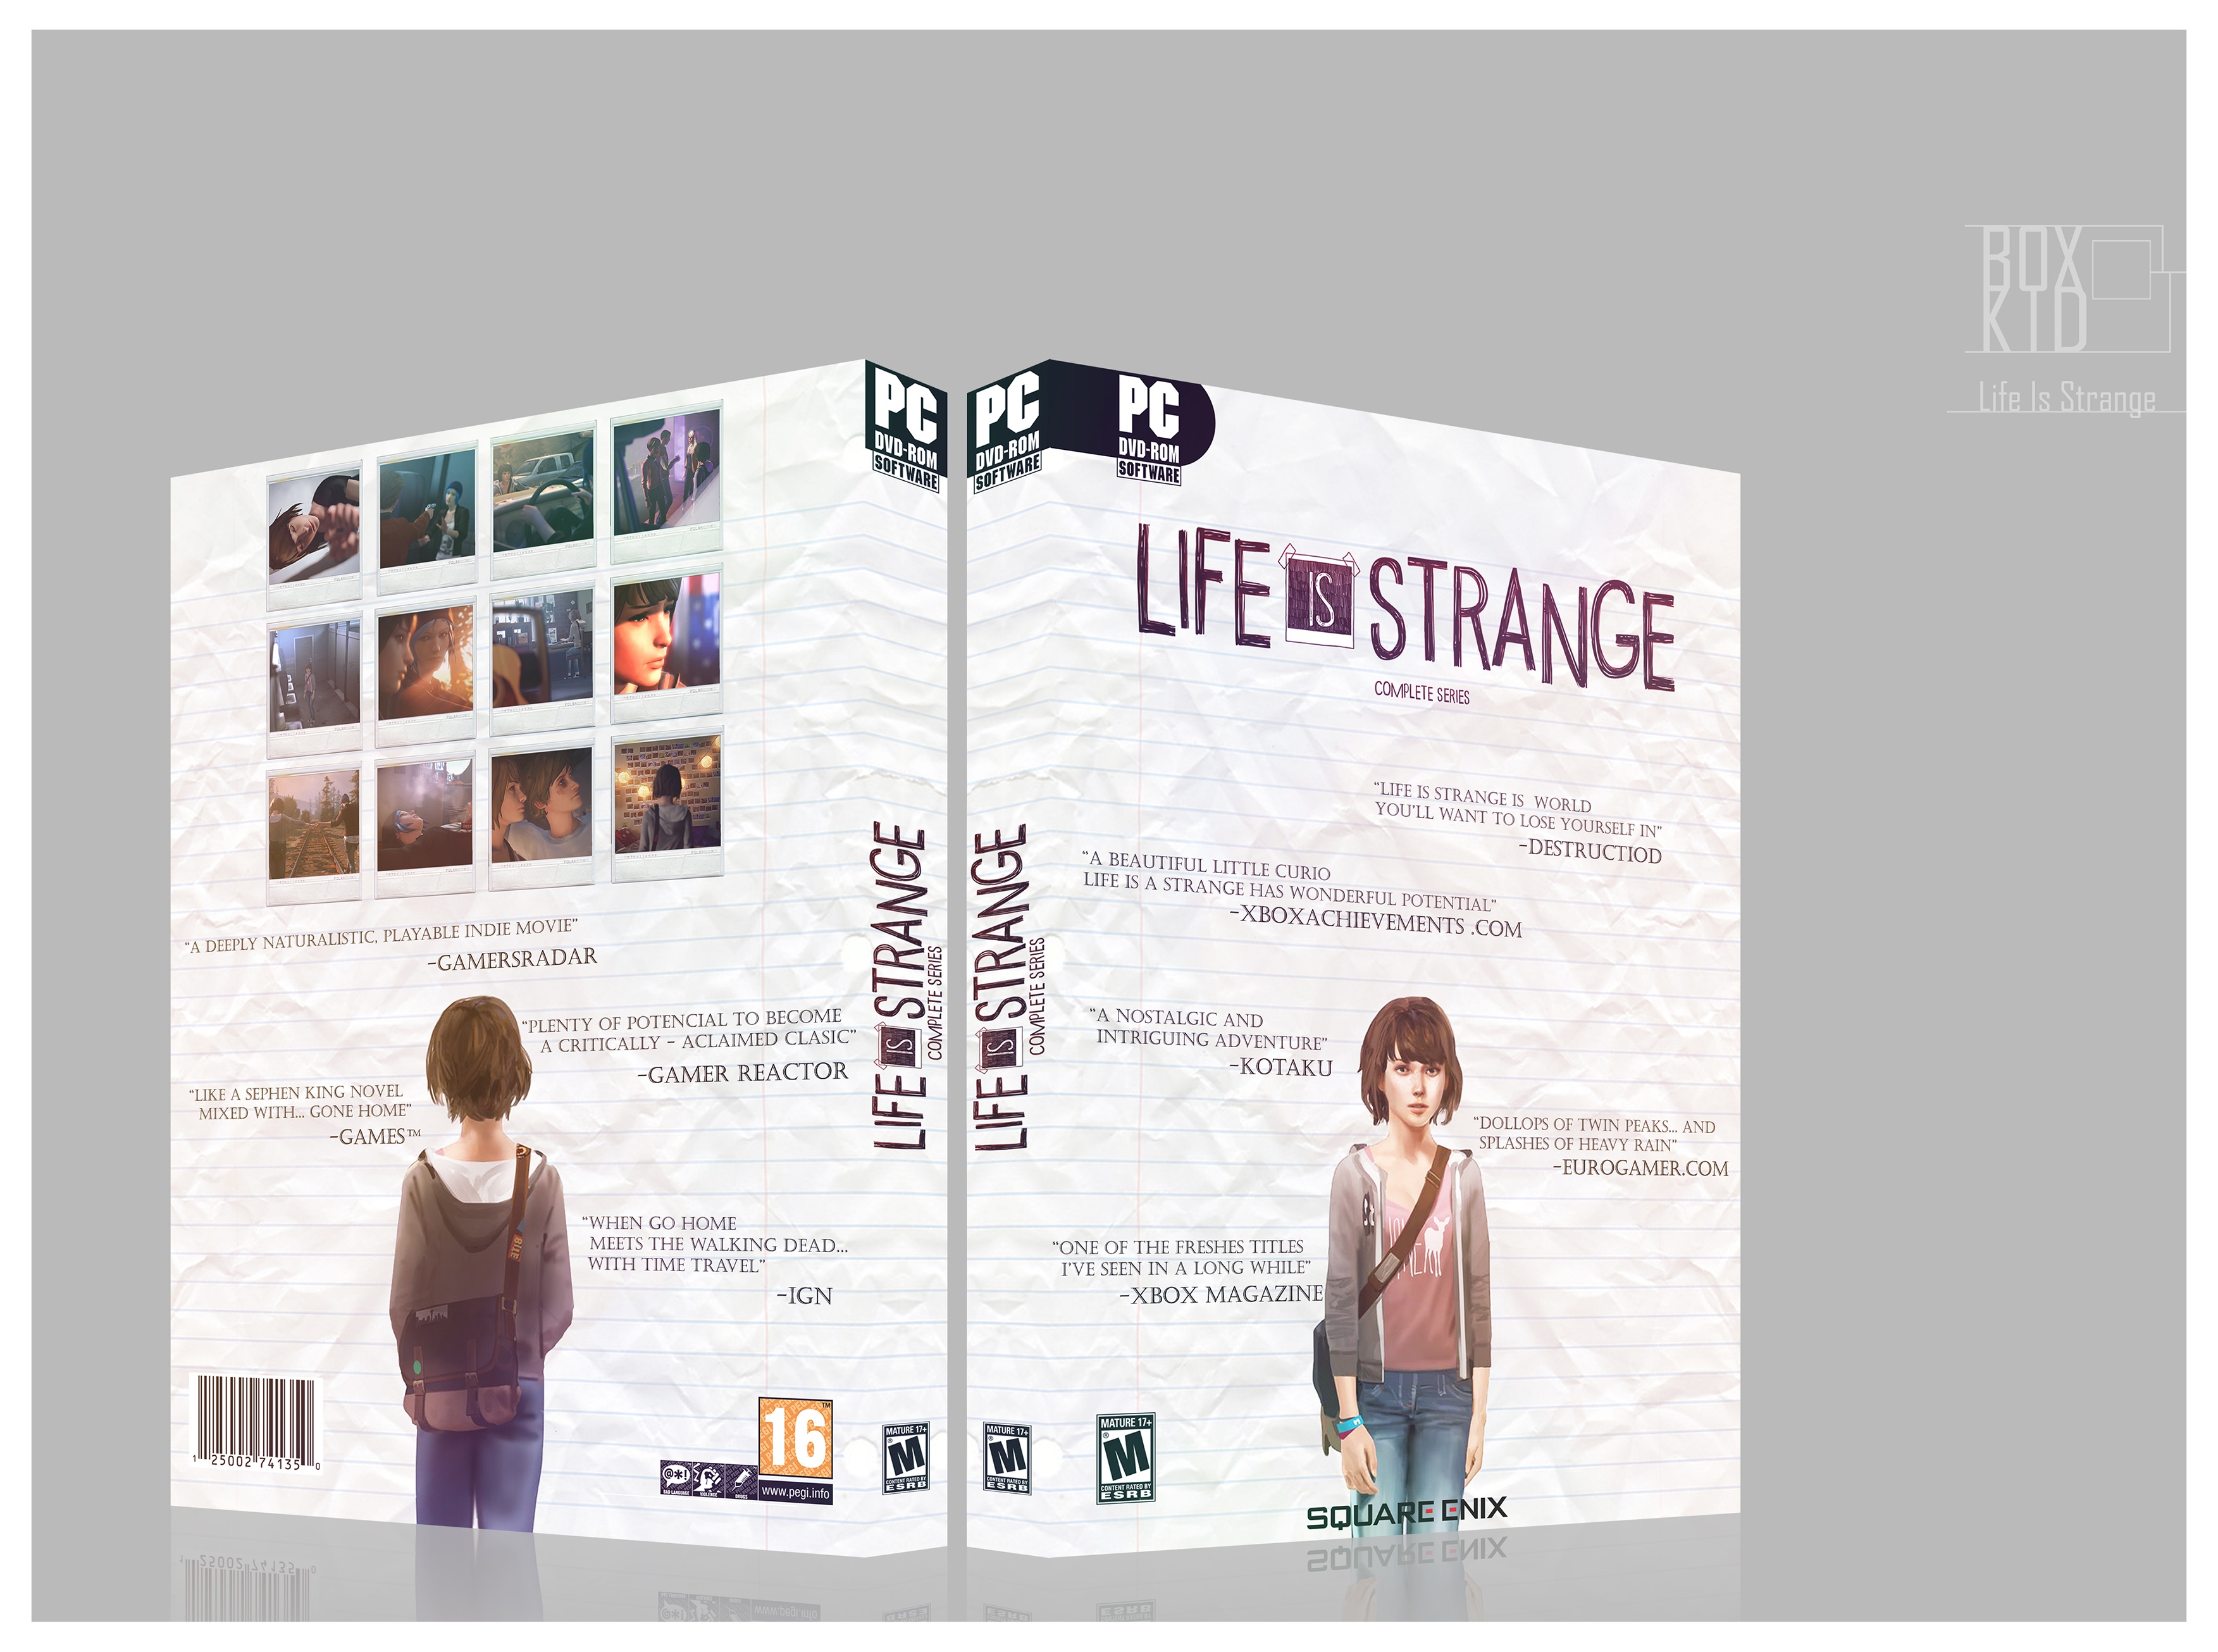 Life is Strange box cover